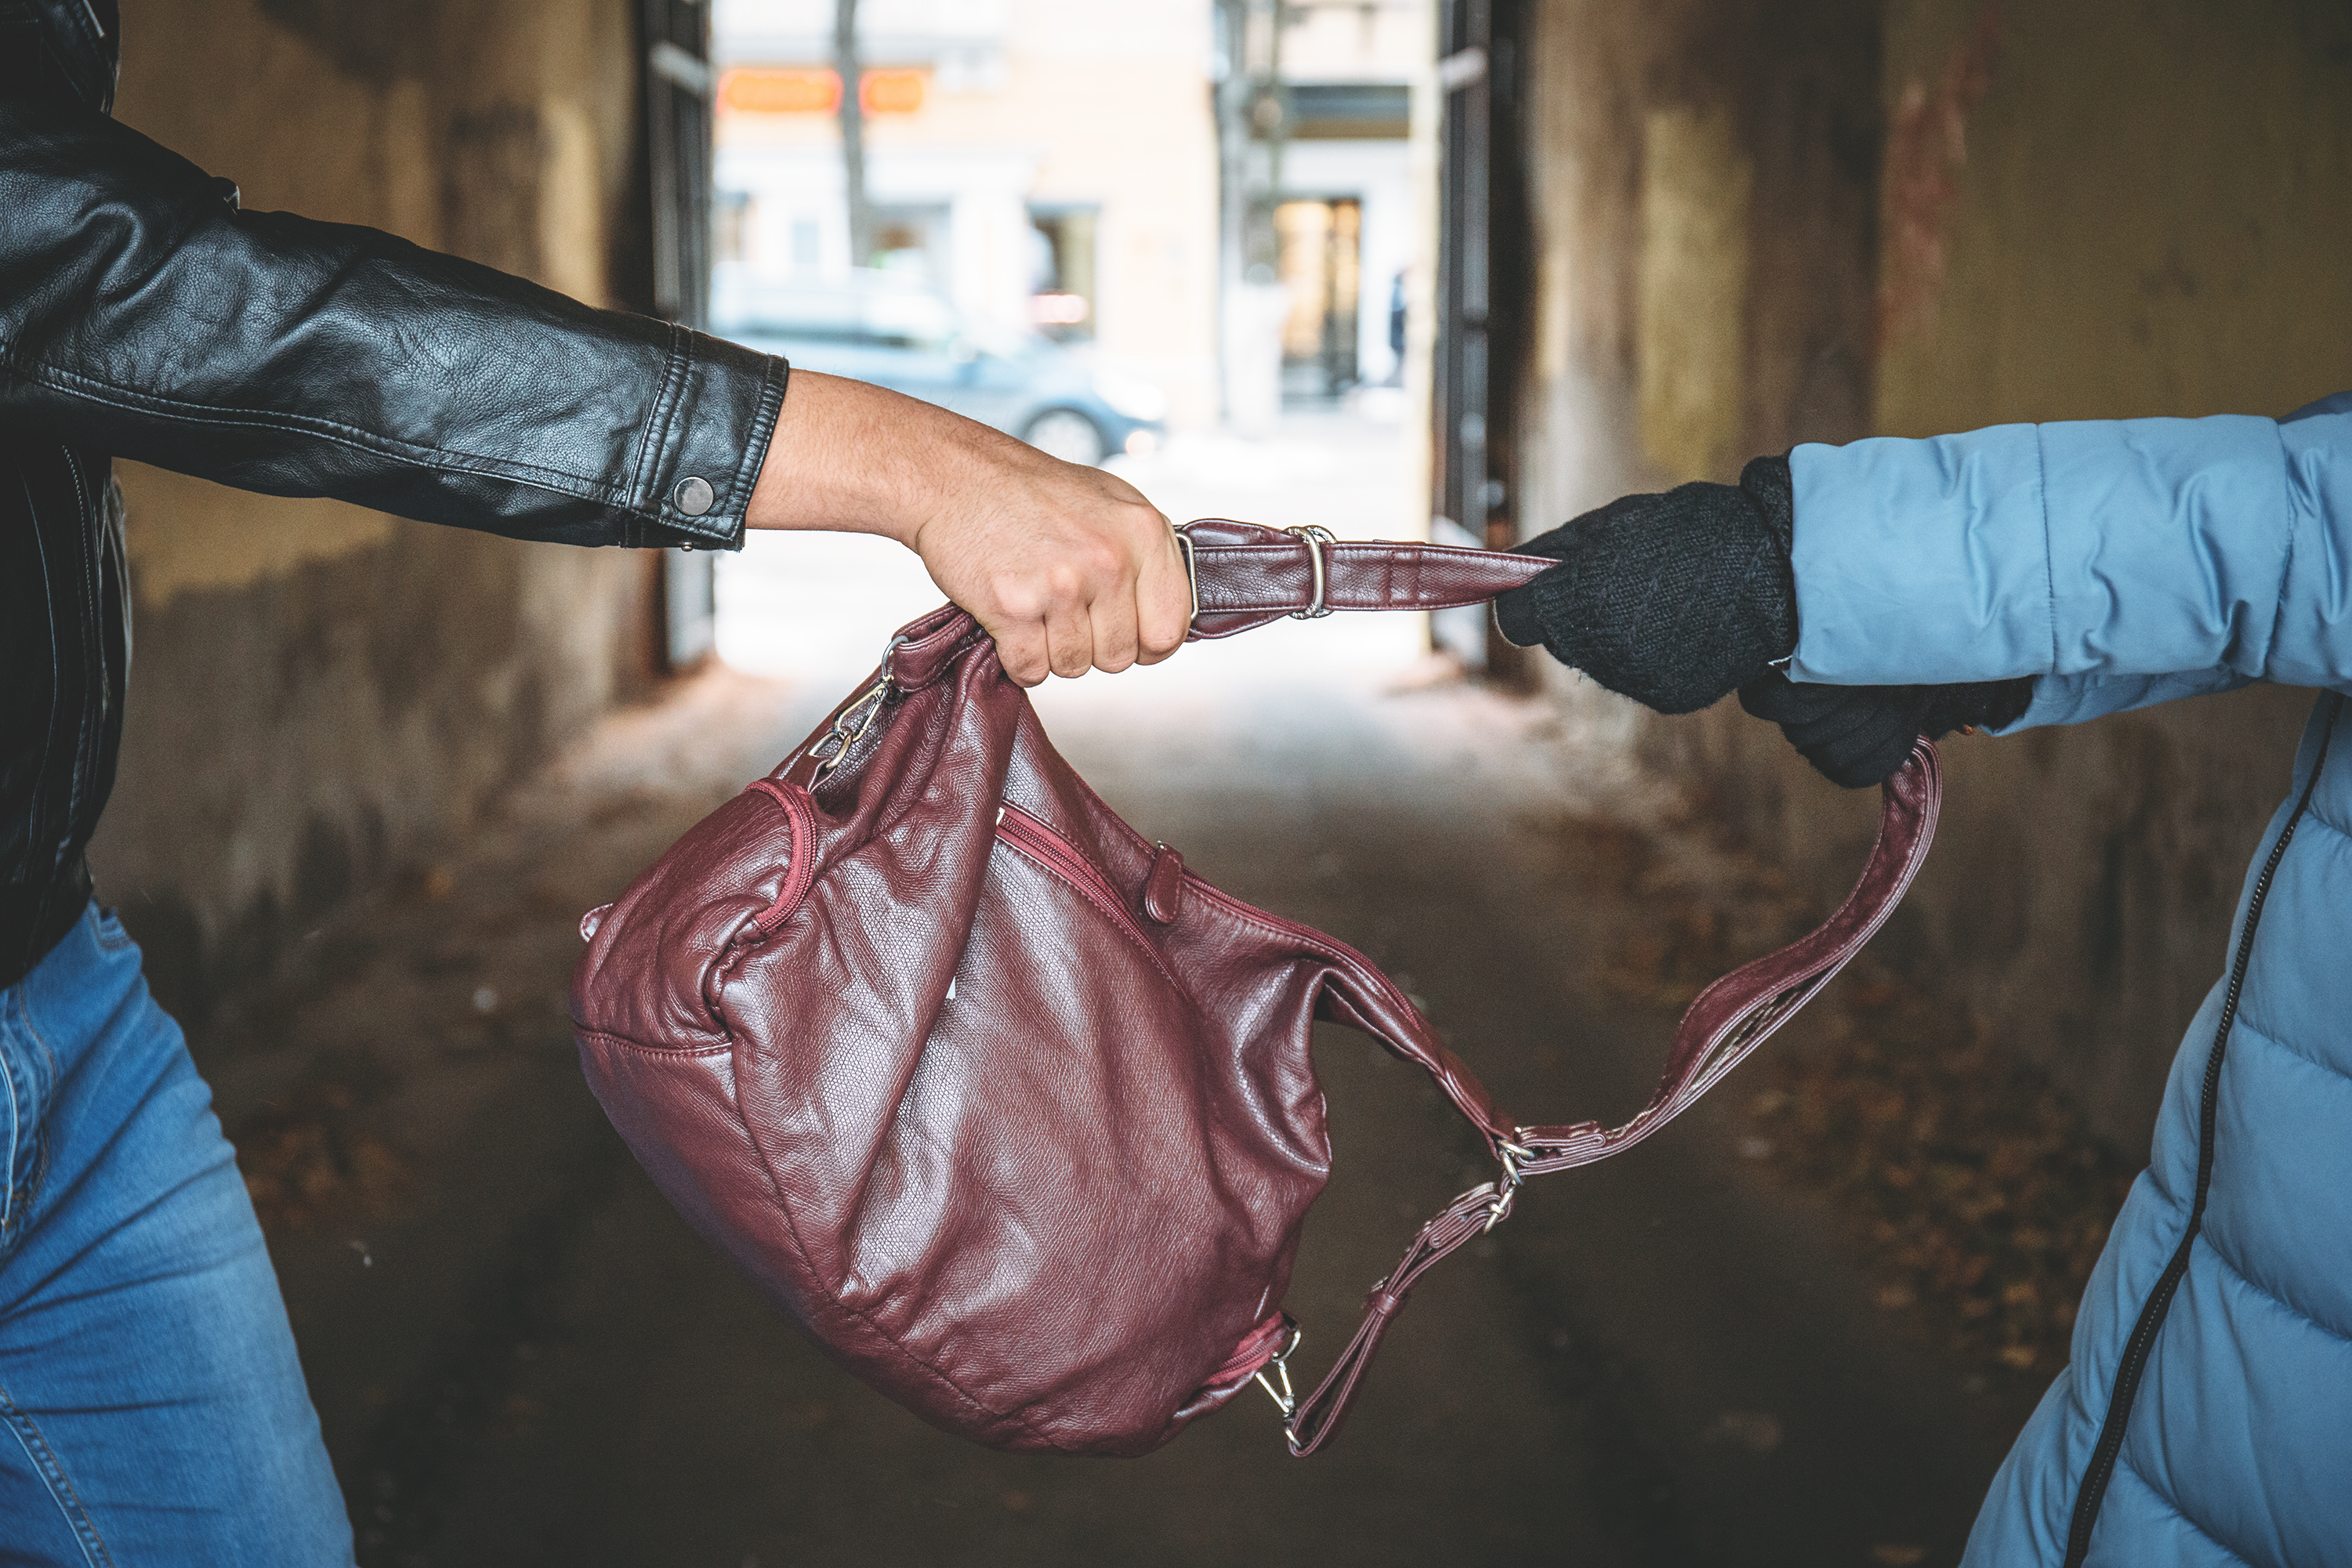 Robber snatching bag | Source: Shutterstock